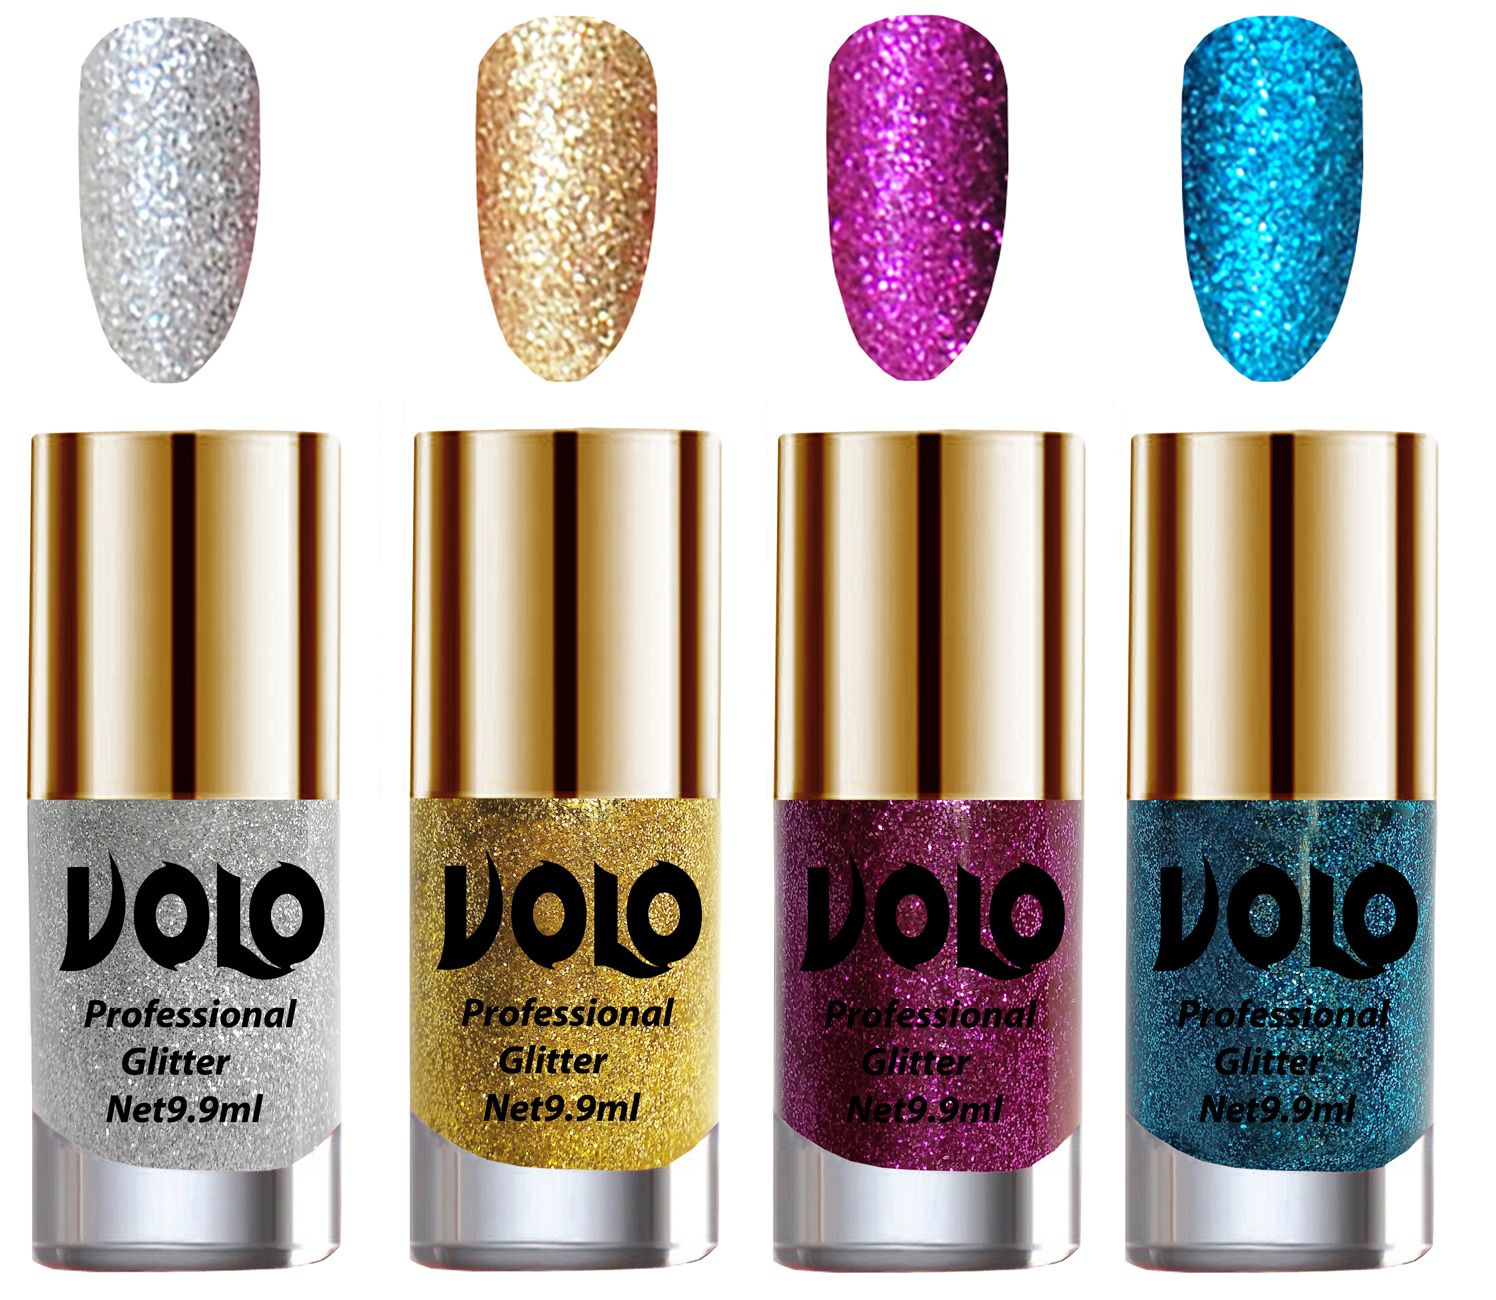     			VOLO Professionally Used Glitter Shine Nail Polish Silver,Gold,Purple Blue Pack of 4 39 mL